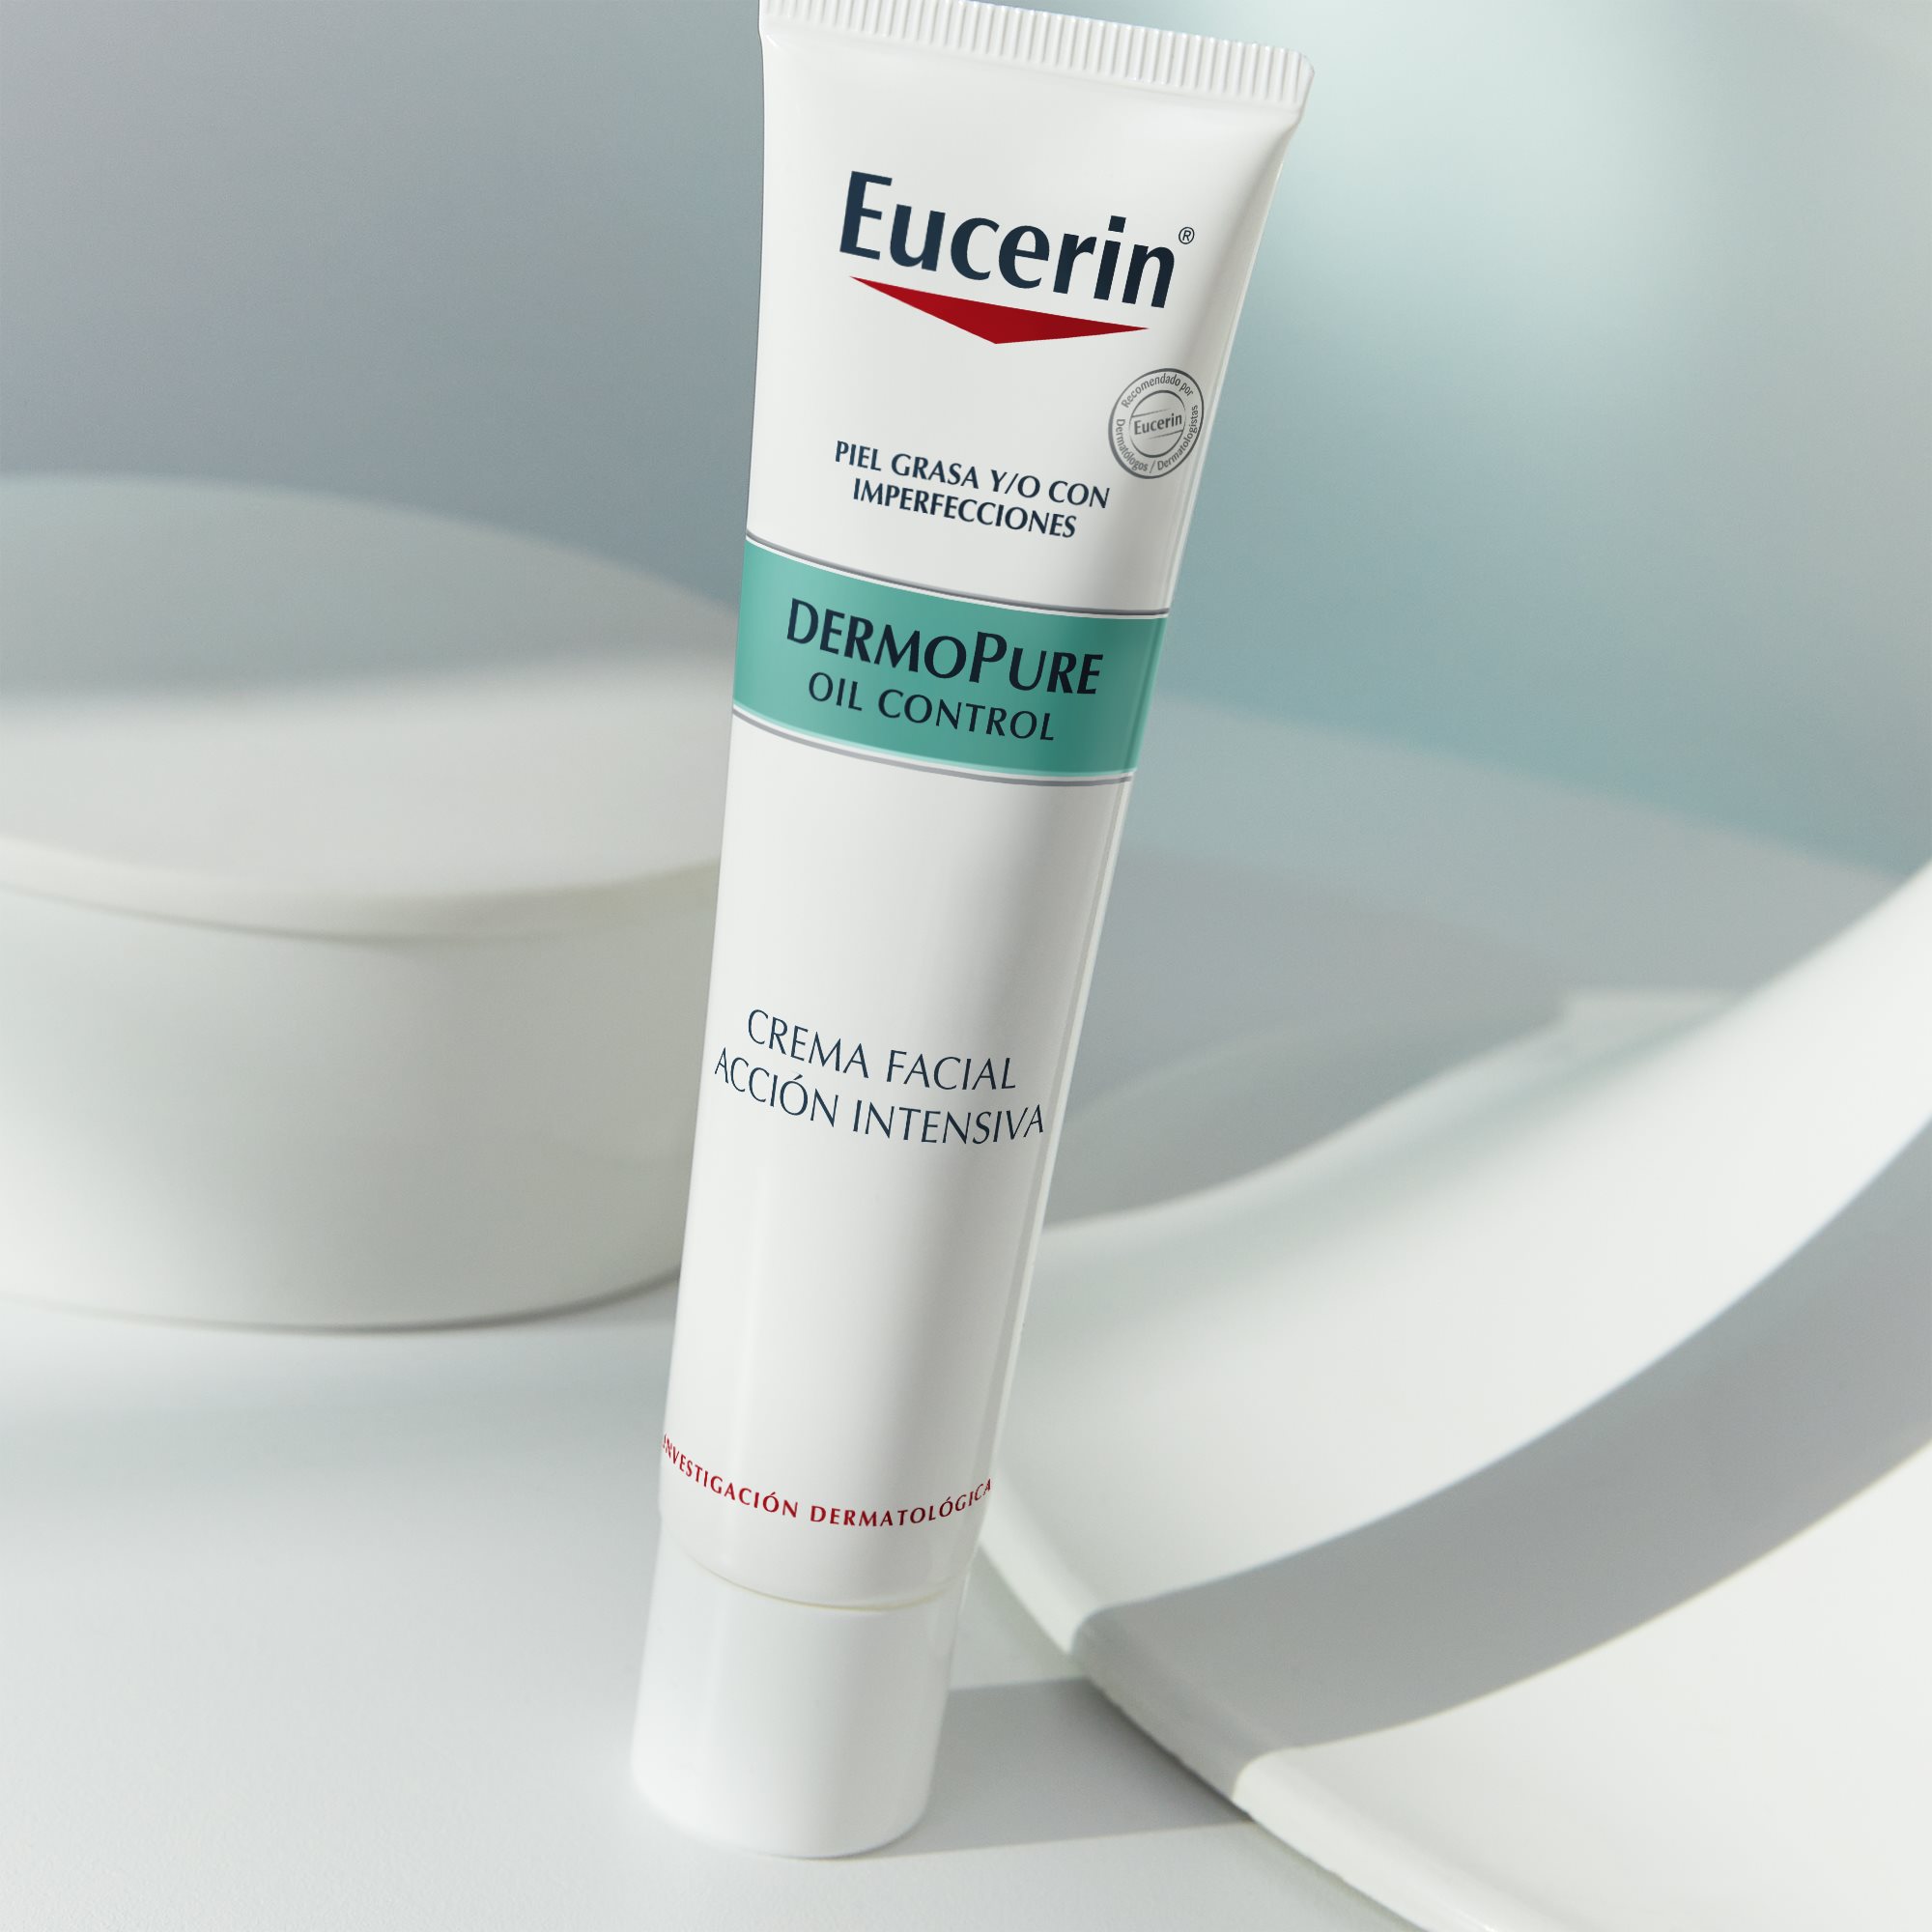 Ananiver punto final Lidiar con DermoPure Crema Facial Acción Intensiva de Noche Piel Grasa | Eucerin